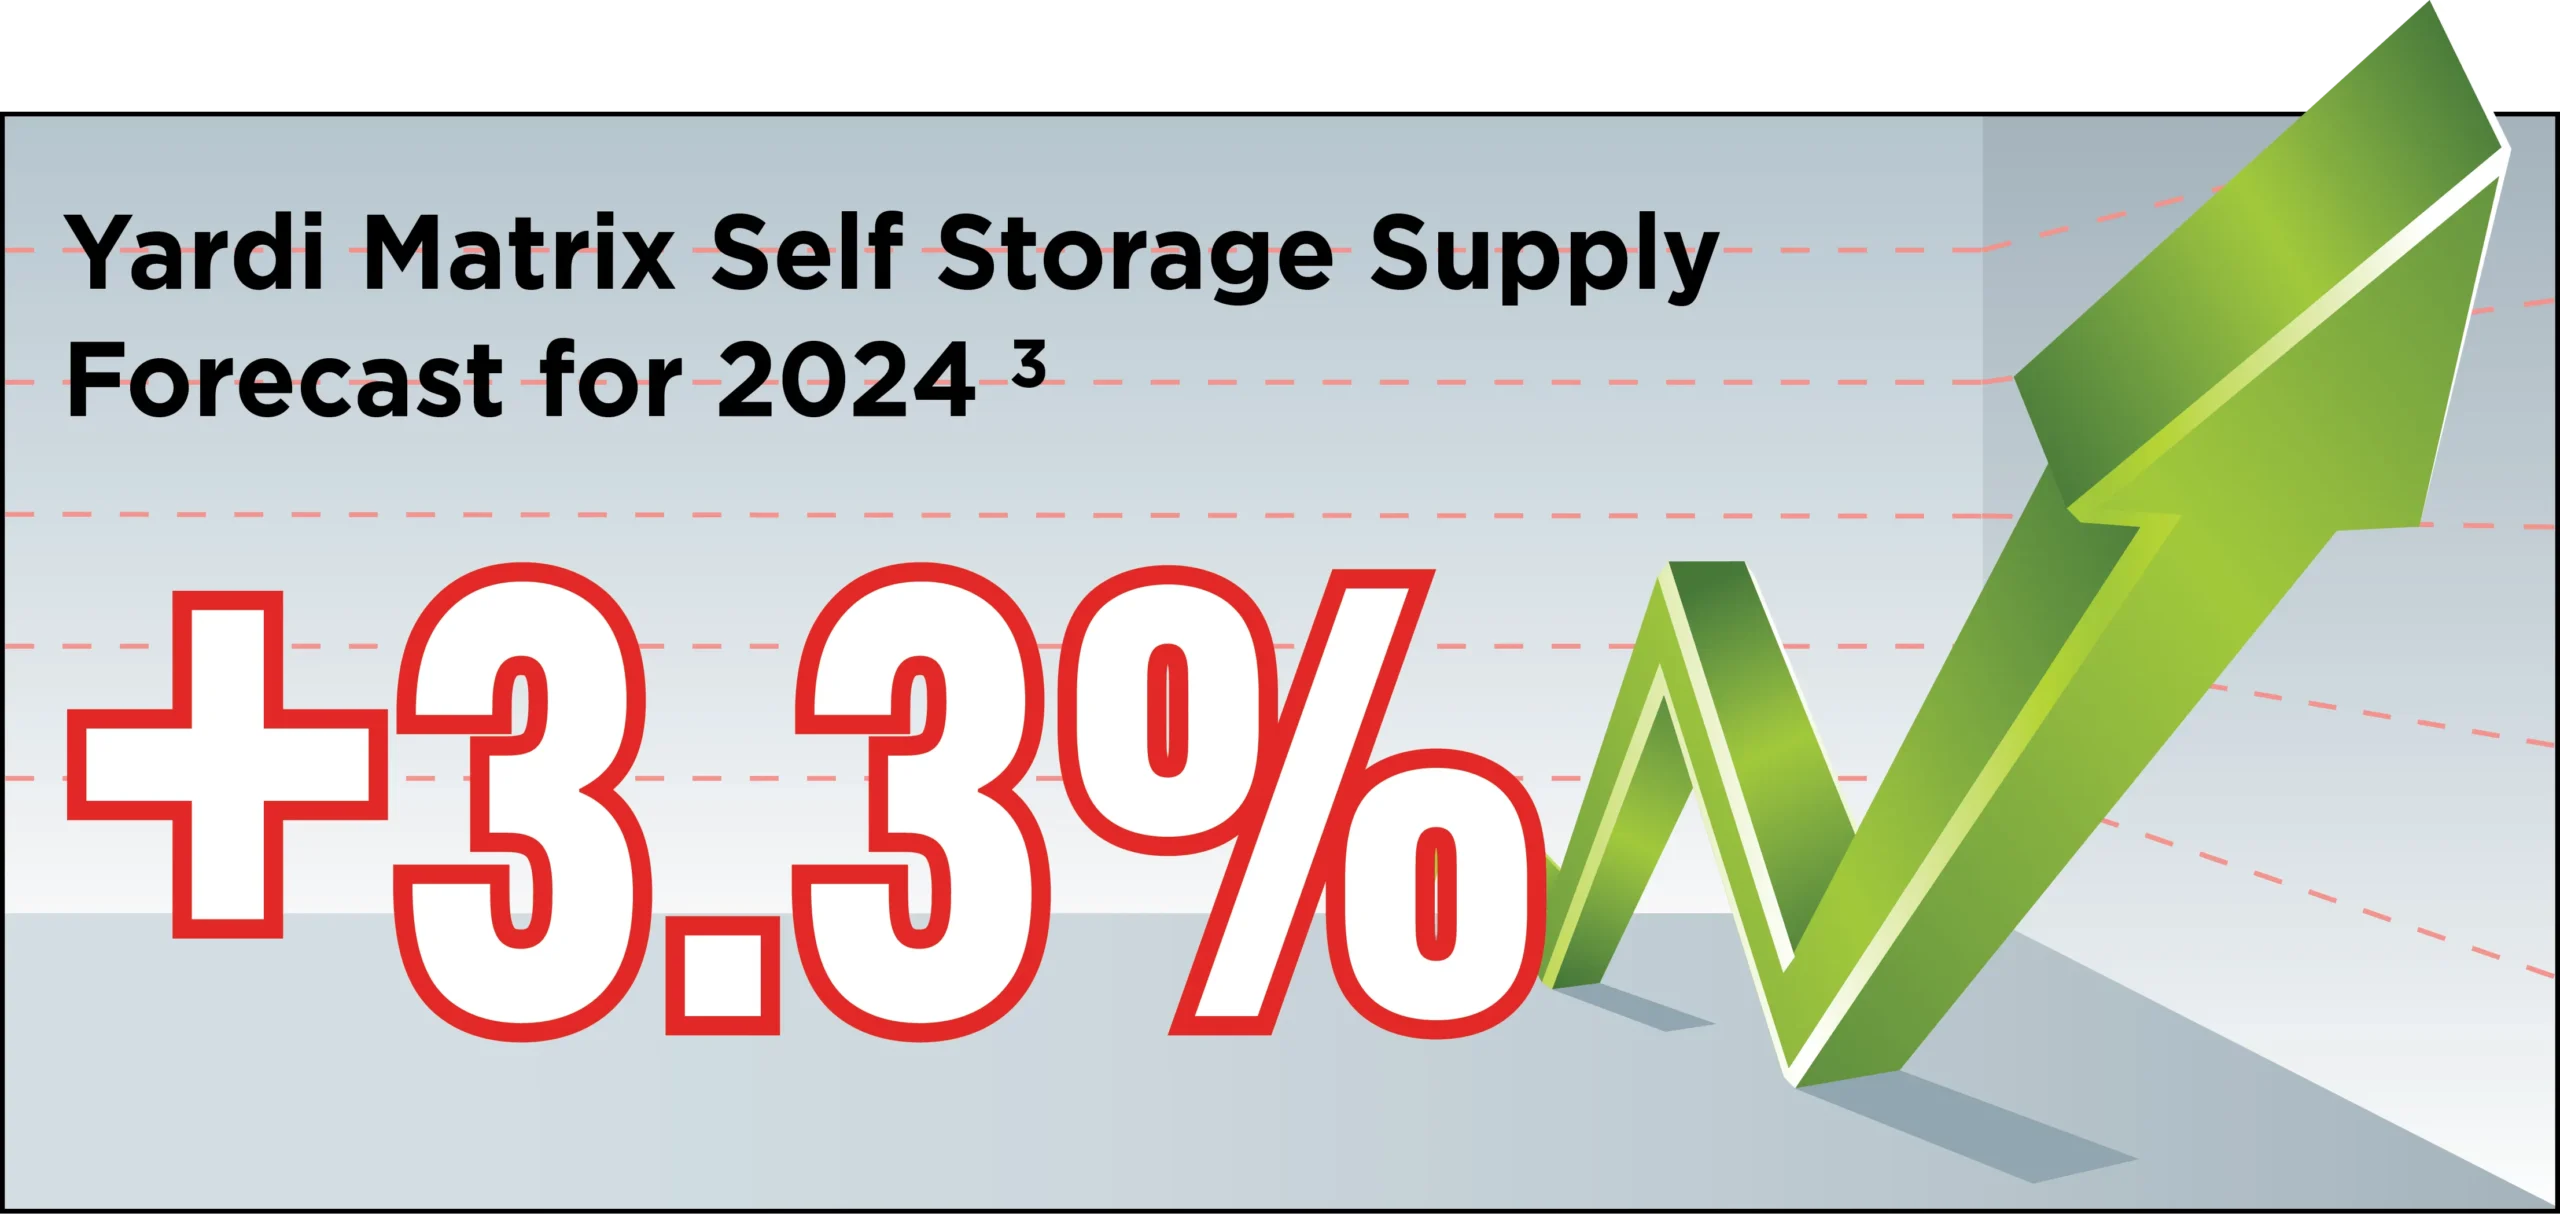 Yardi Matrix Self Storage Supply Forecast for 2024 +3.3%